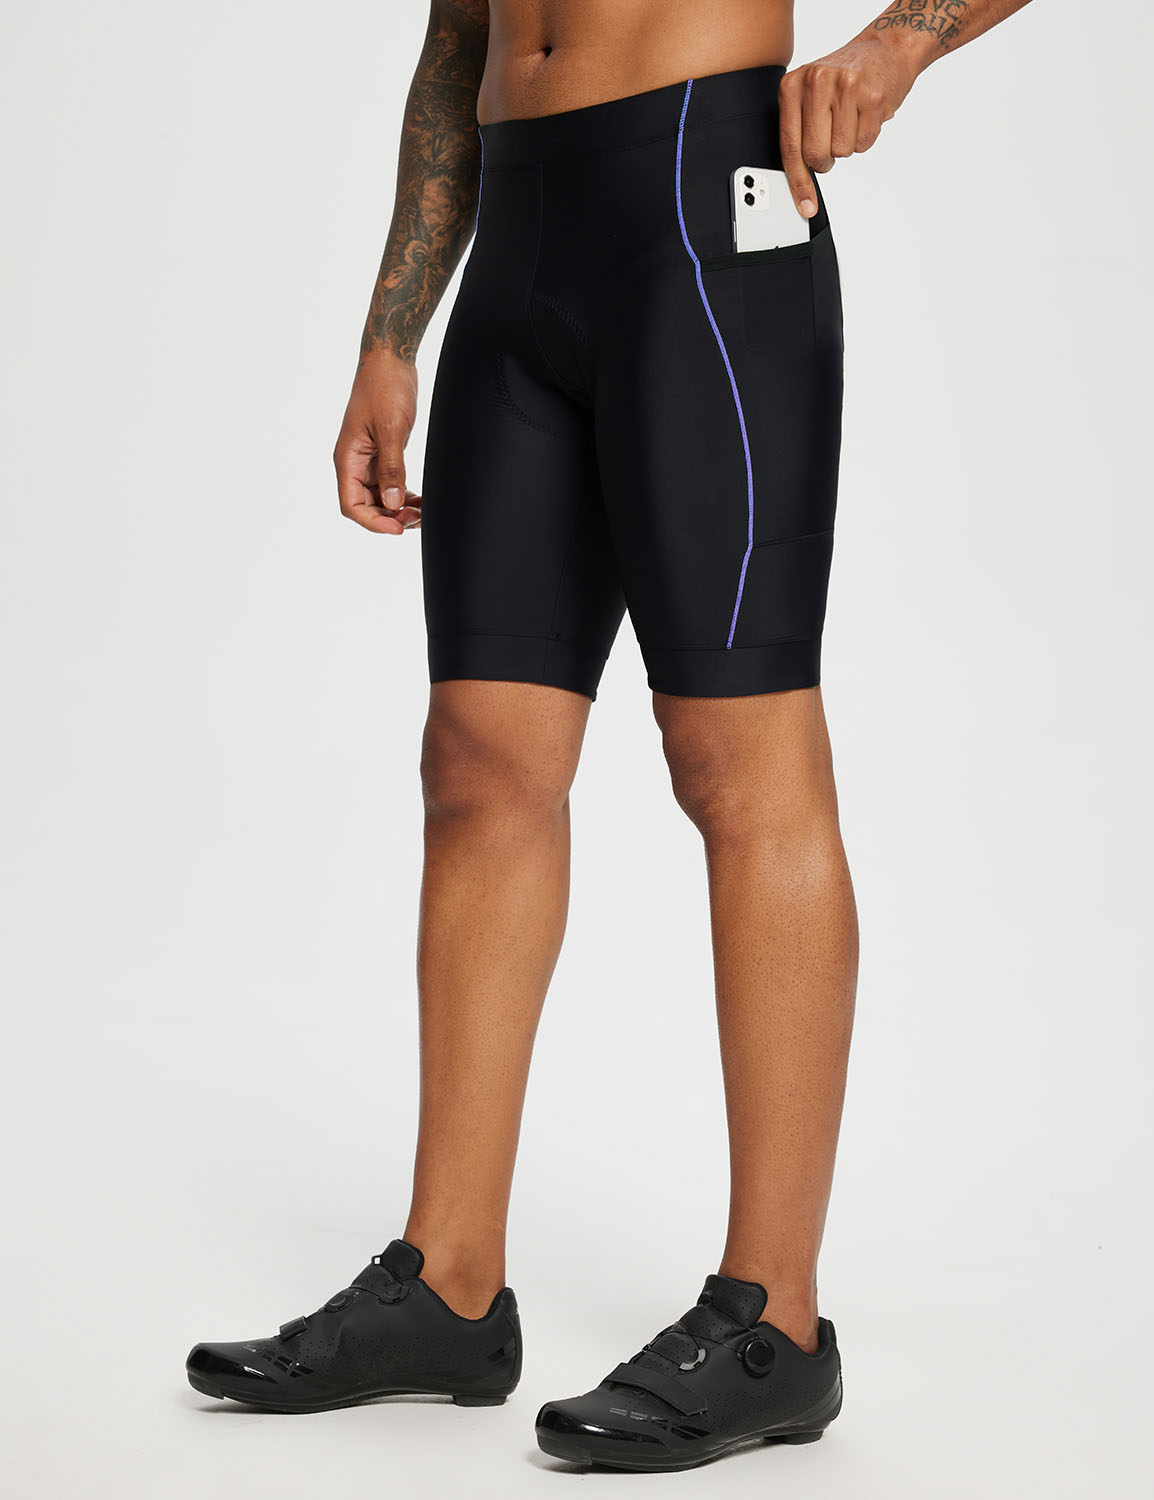 Baleaf Men's Airide 4D Padded MTB Shorts eai016 Black/Blue Side